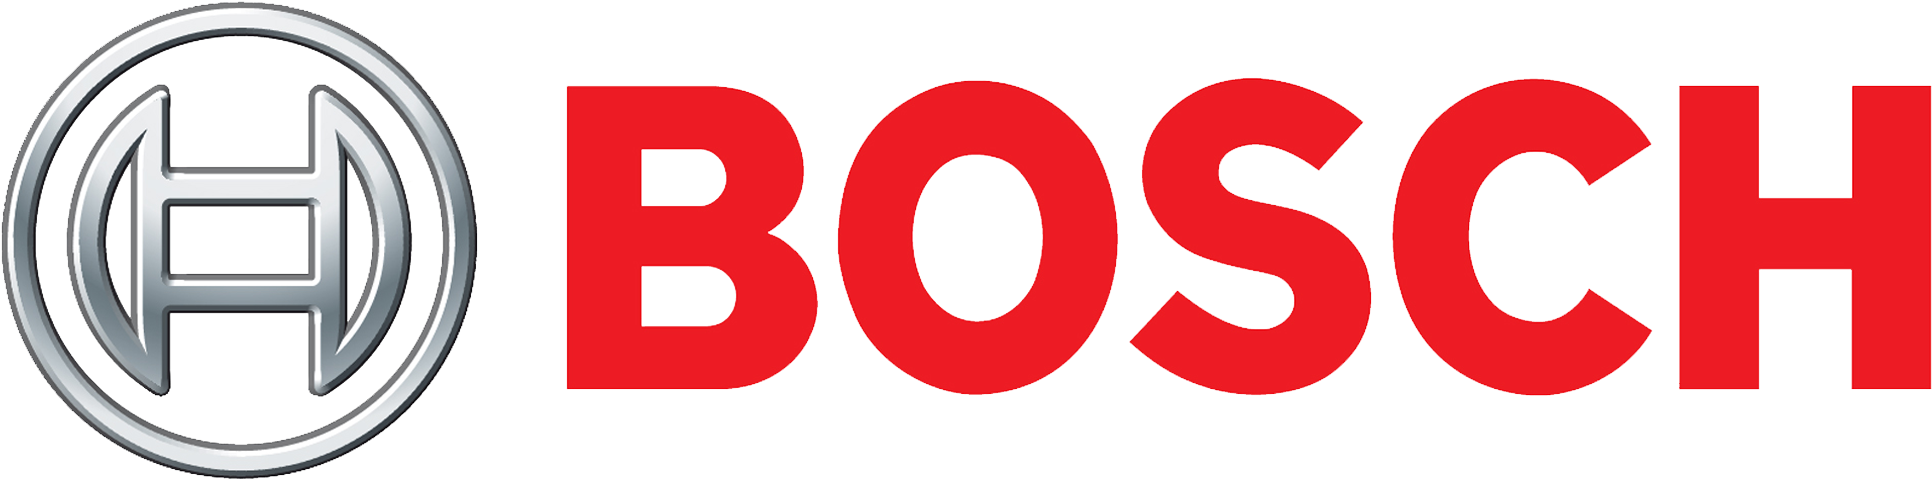 Bosch-logo - High Resolution Bosch Logo (2013x824)